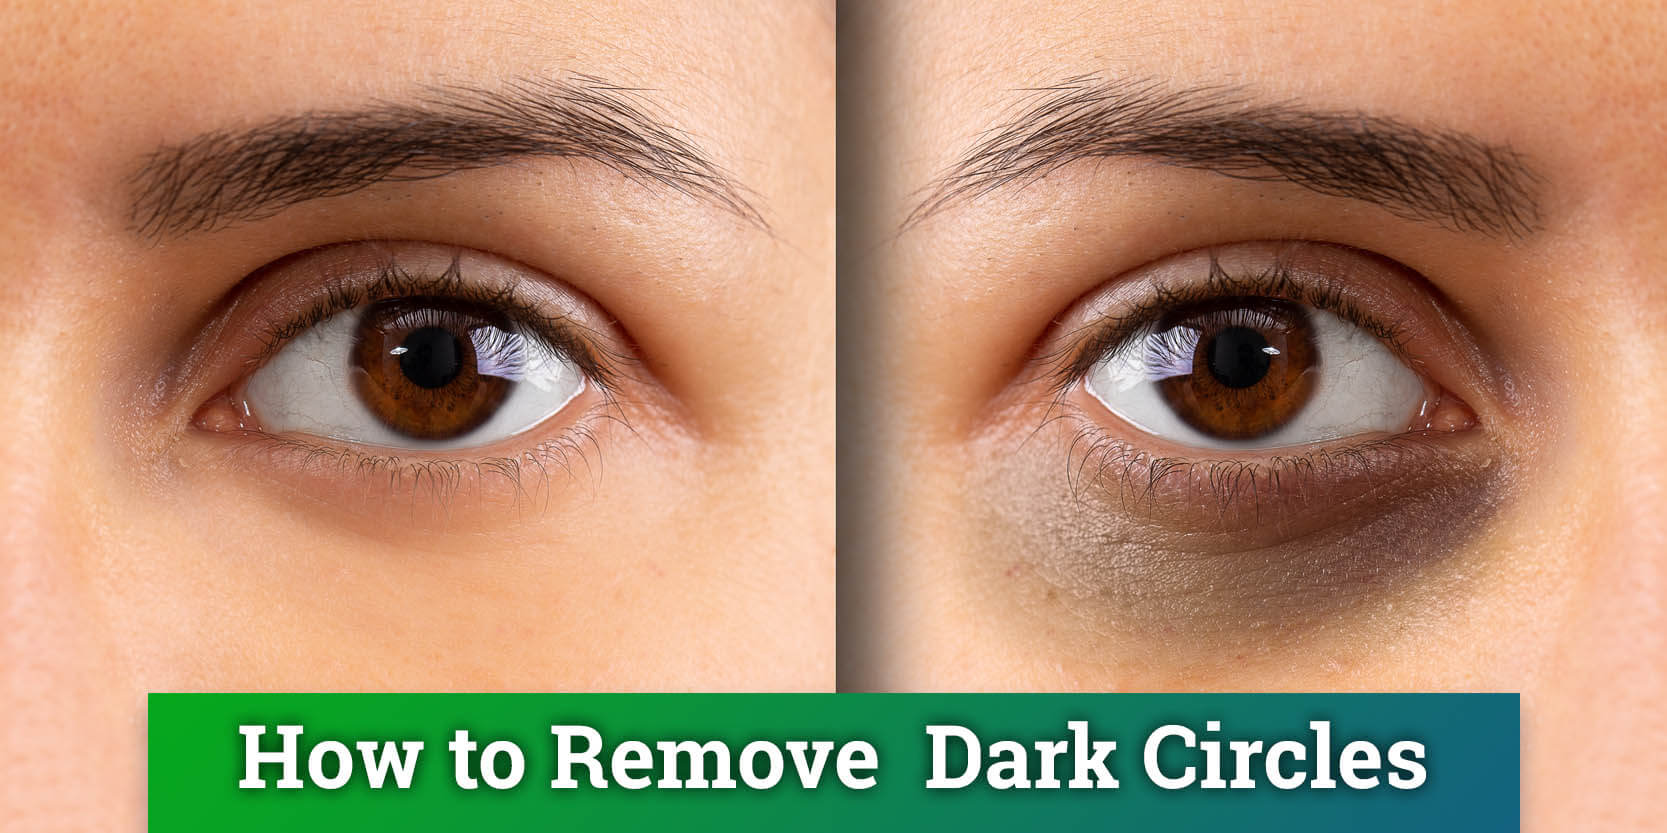 How to Get Rid of Dark Circles and Under Eye Bags - Dark Circles